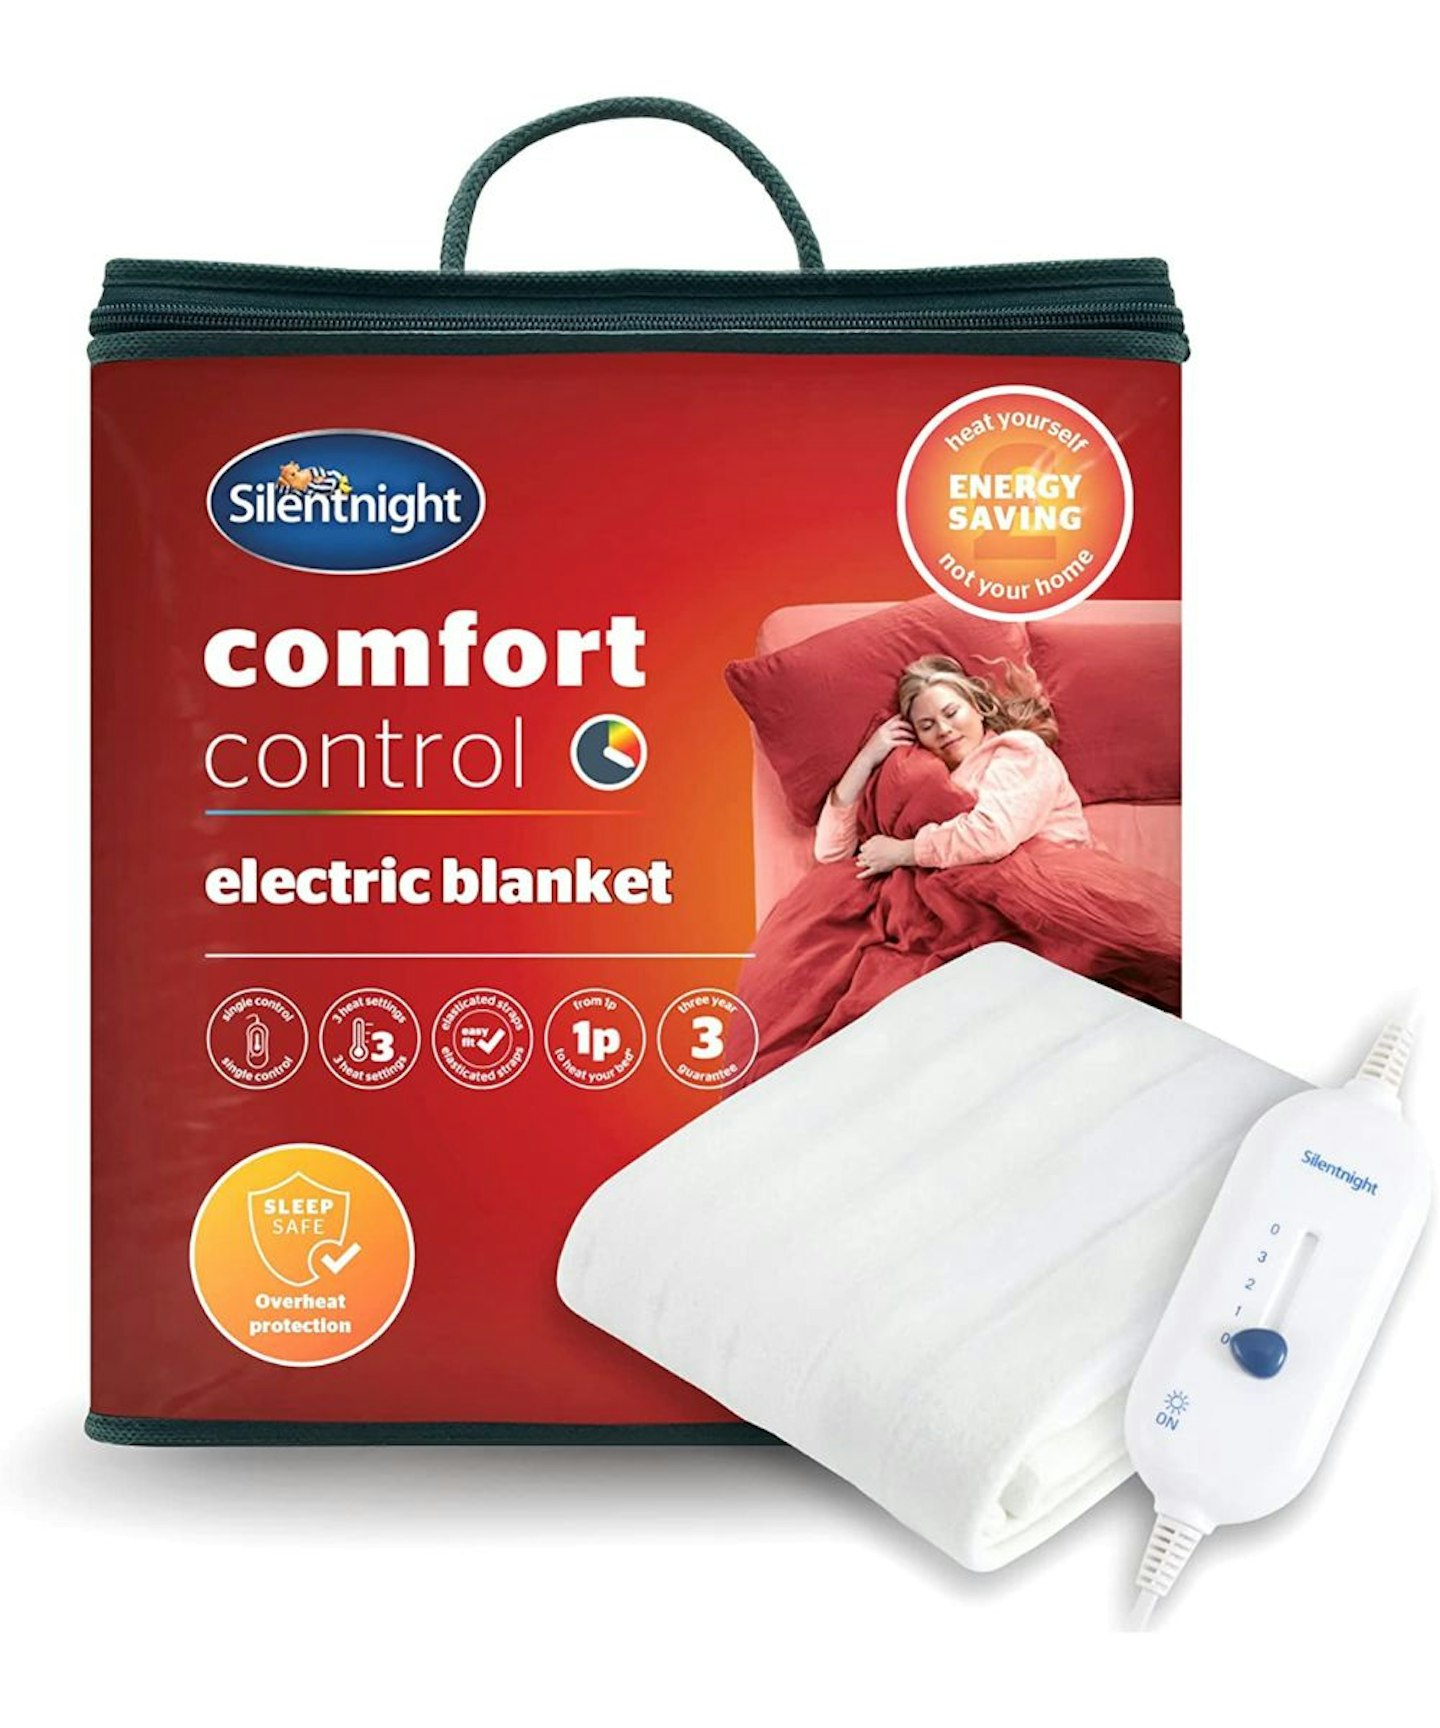 https://images.bauerhosting.com/celebrity/sites/2/2022/11/Silentnight-Comfort-Control-Electric-Blanket-Double-White.jpg?auto=format&w=1440&q=80